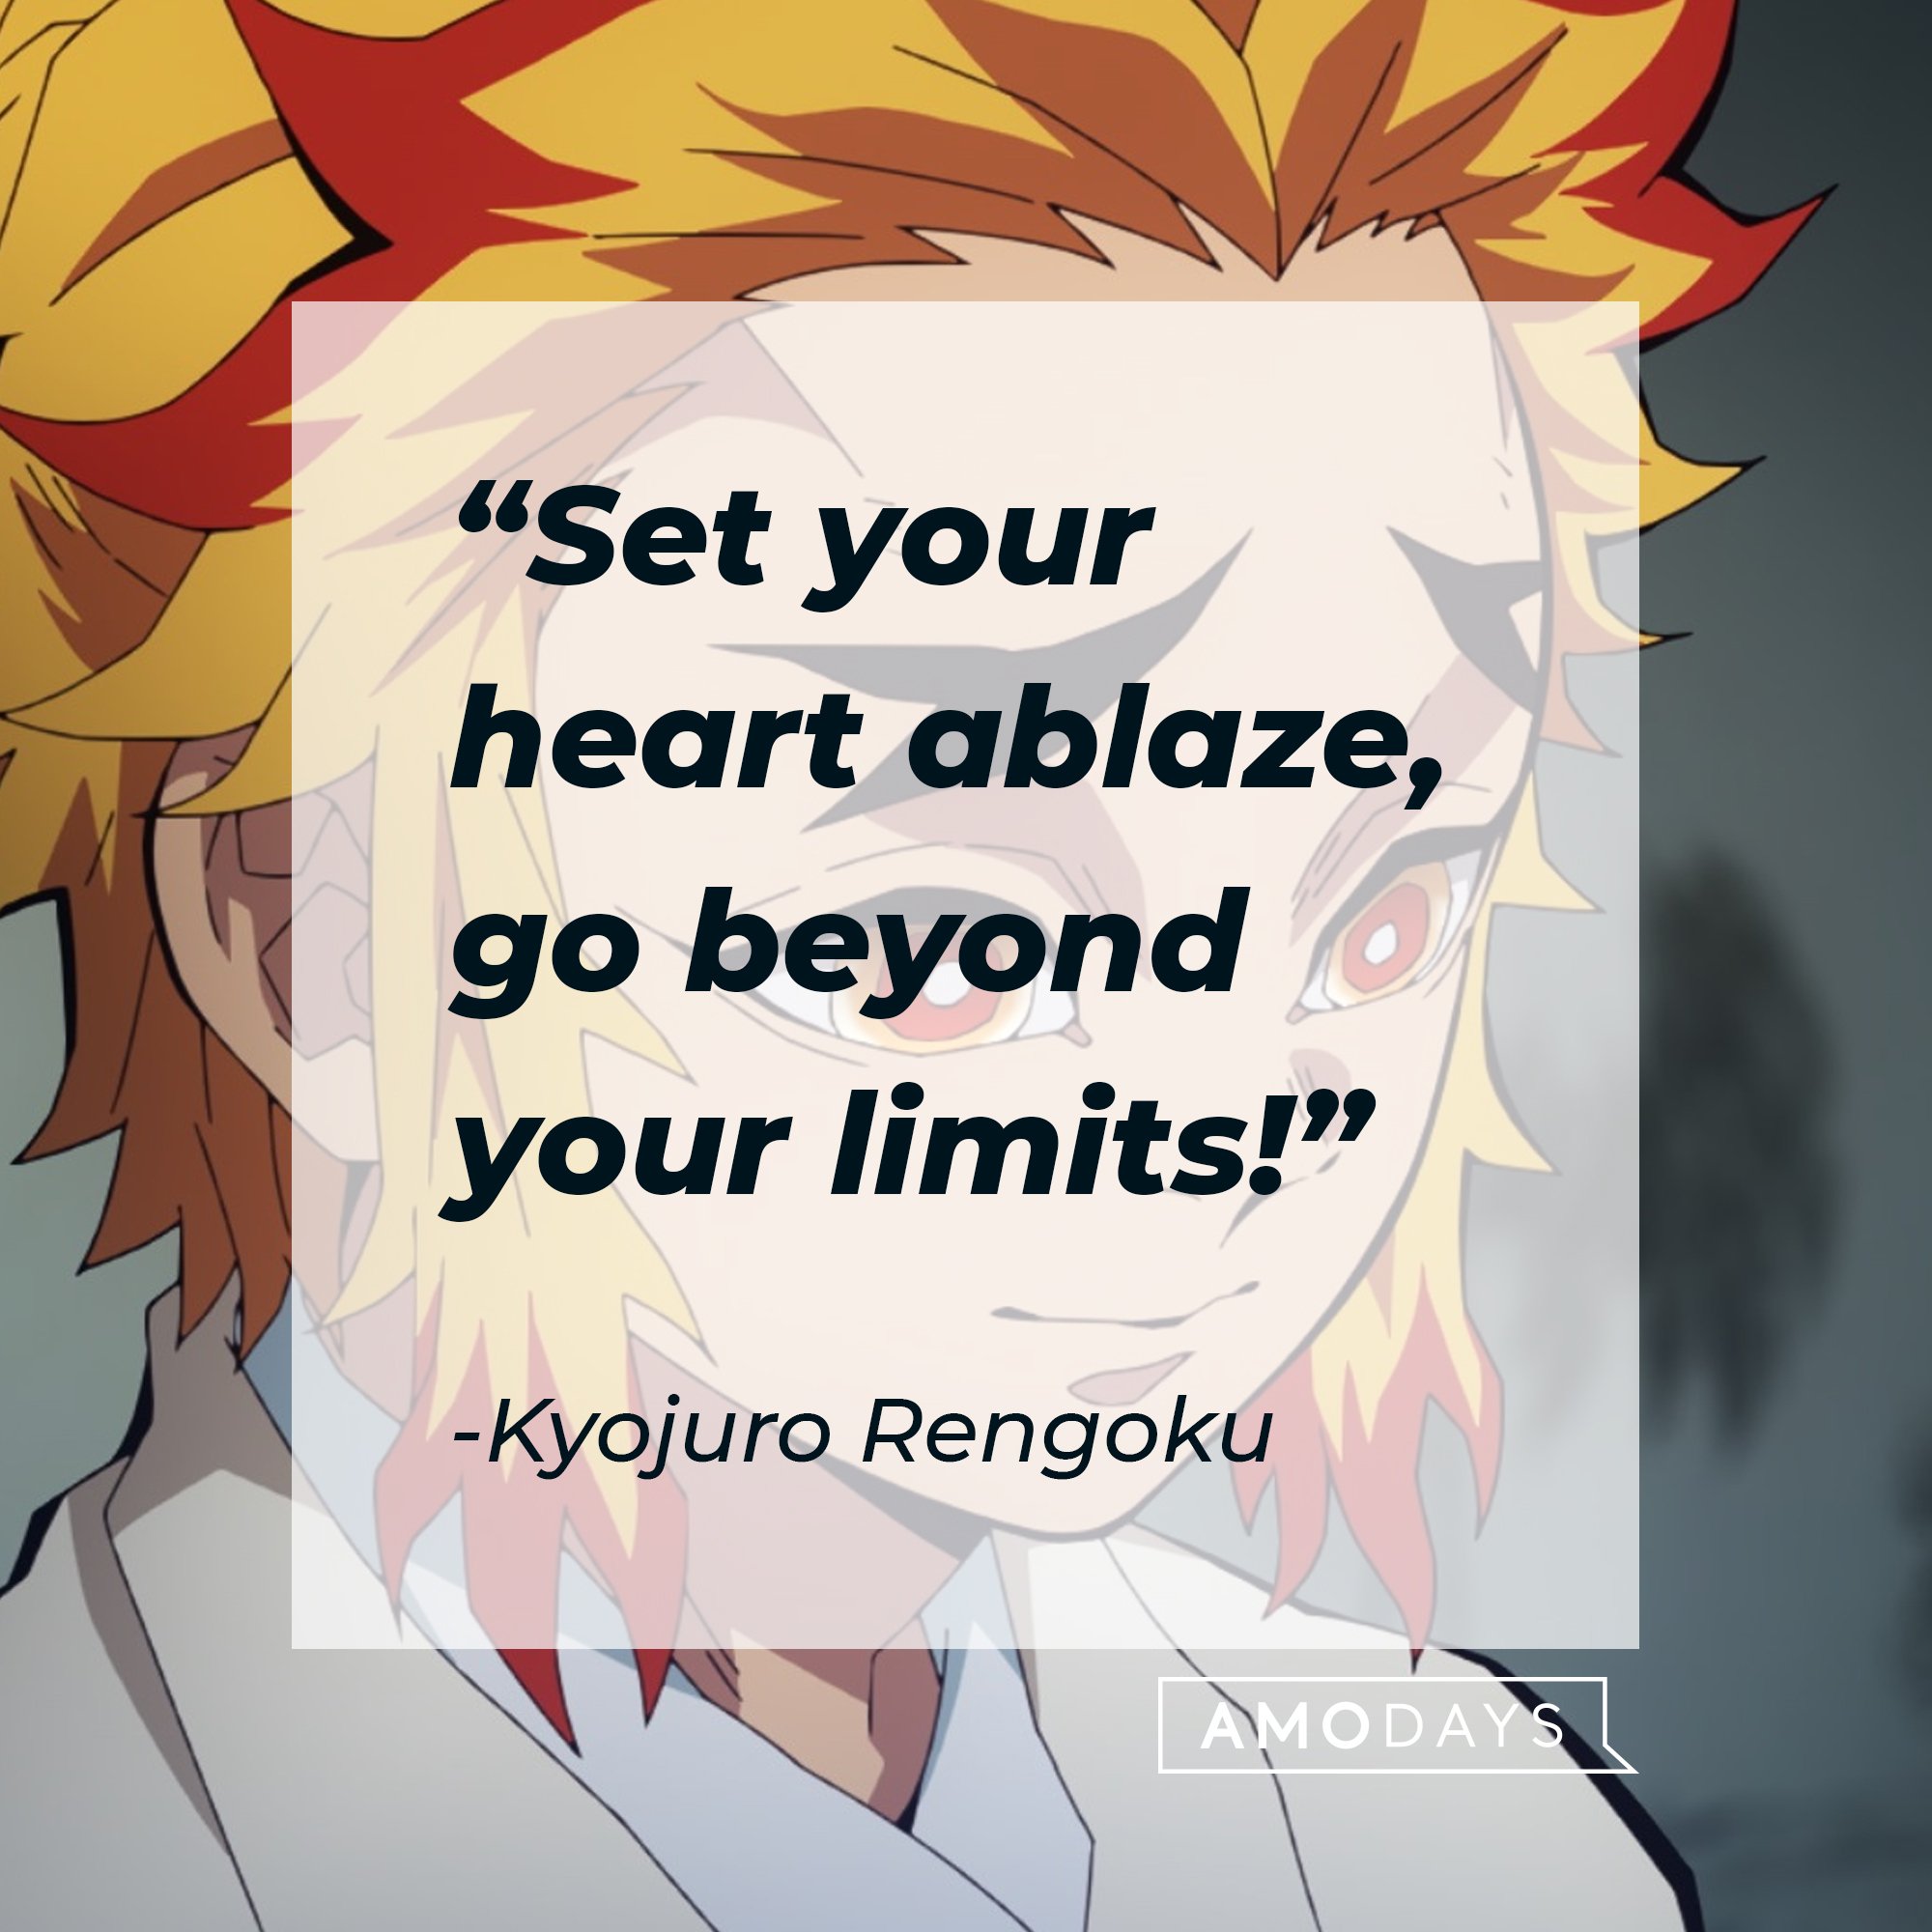 Kyojuro Rengoku’s quote: “Set your heart ablaze, go beyond your limits!” | Image: AmoDays